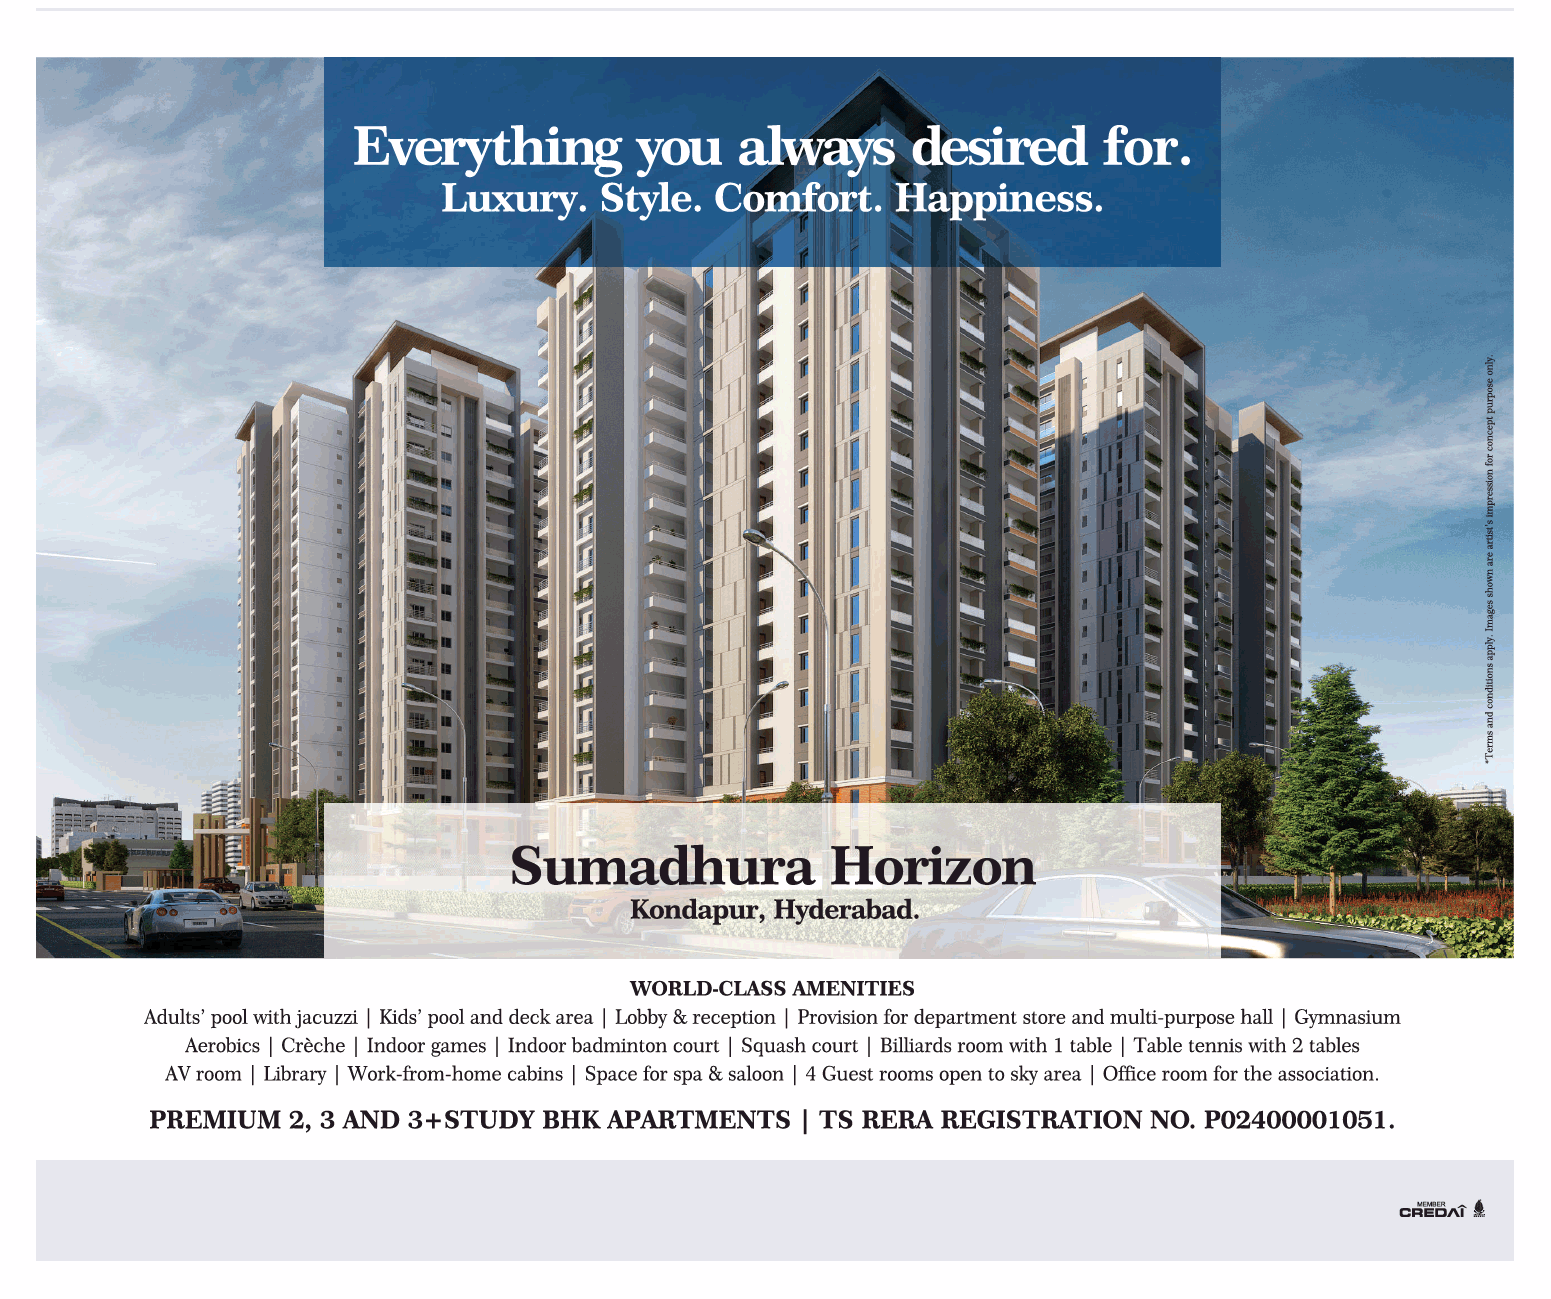 Premium 2, 3 and 3+study BHK apartments at Sumadhura Horizon in Kondapur, Hyderabad